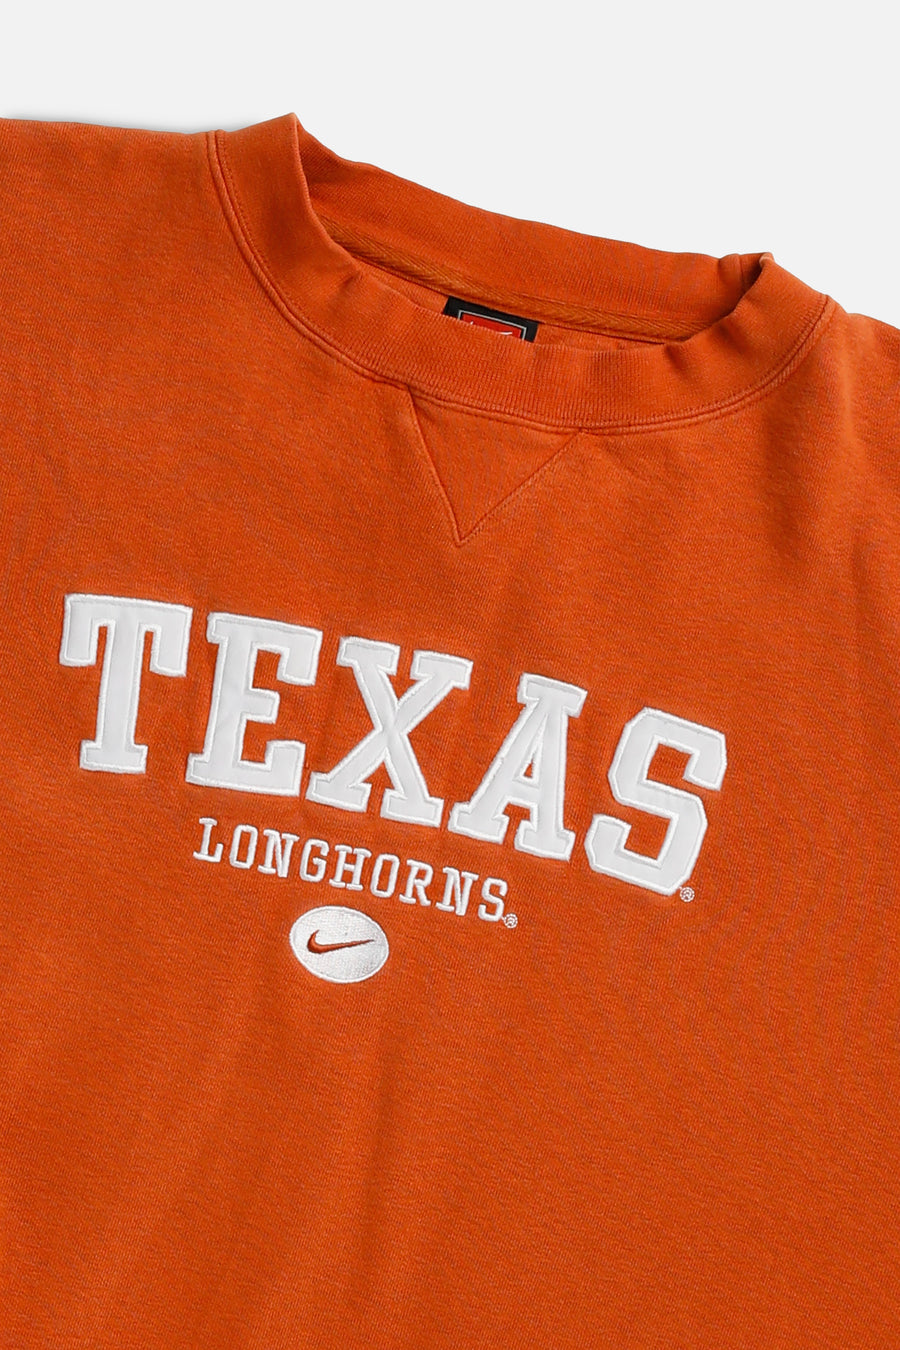 Vintage Texas Longhorns Sweatshirt - XXL